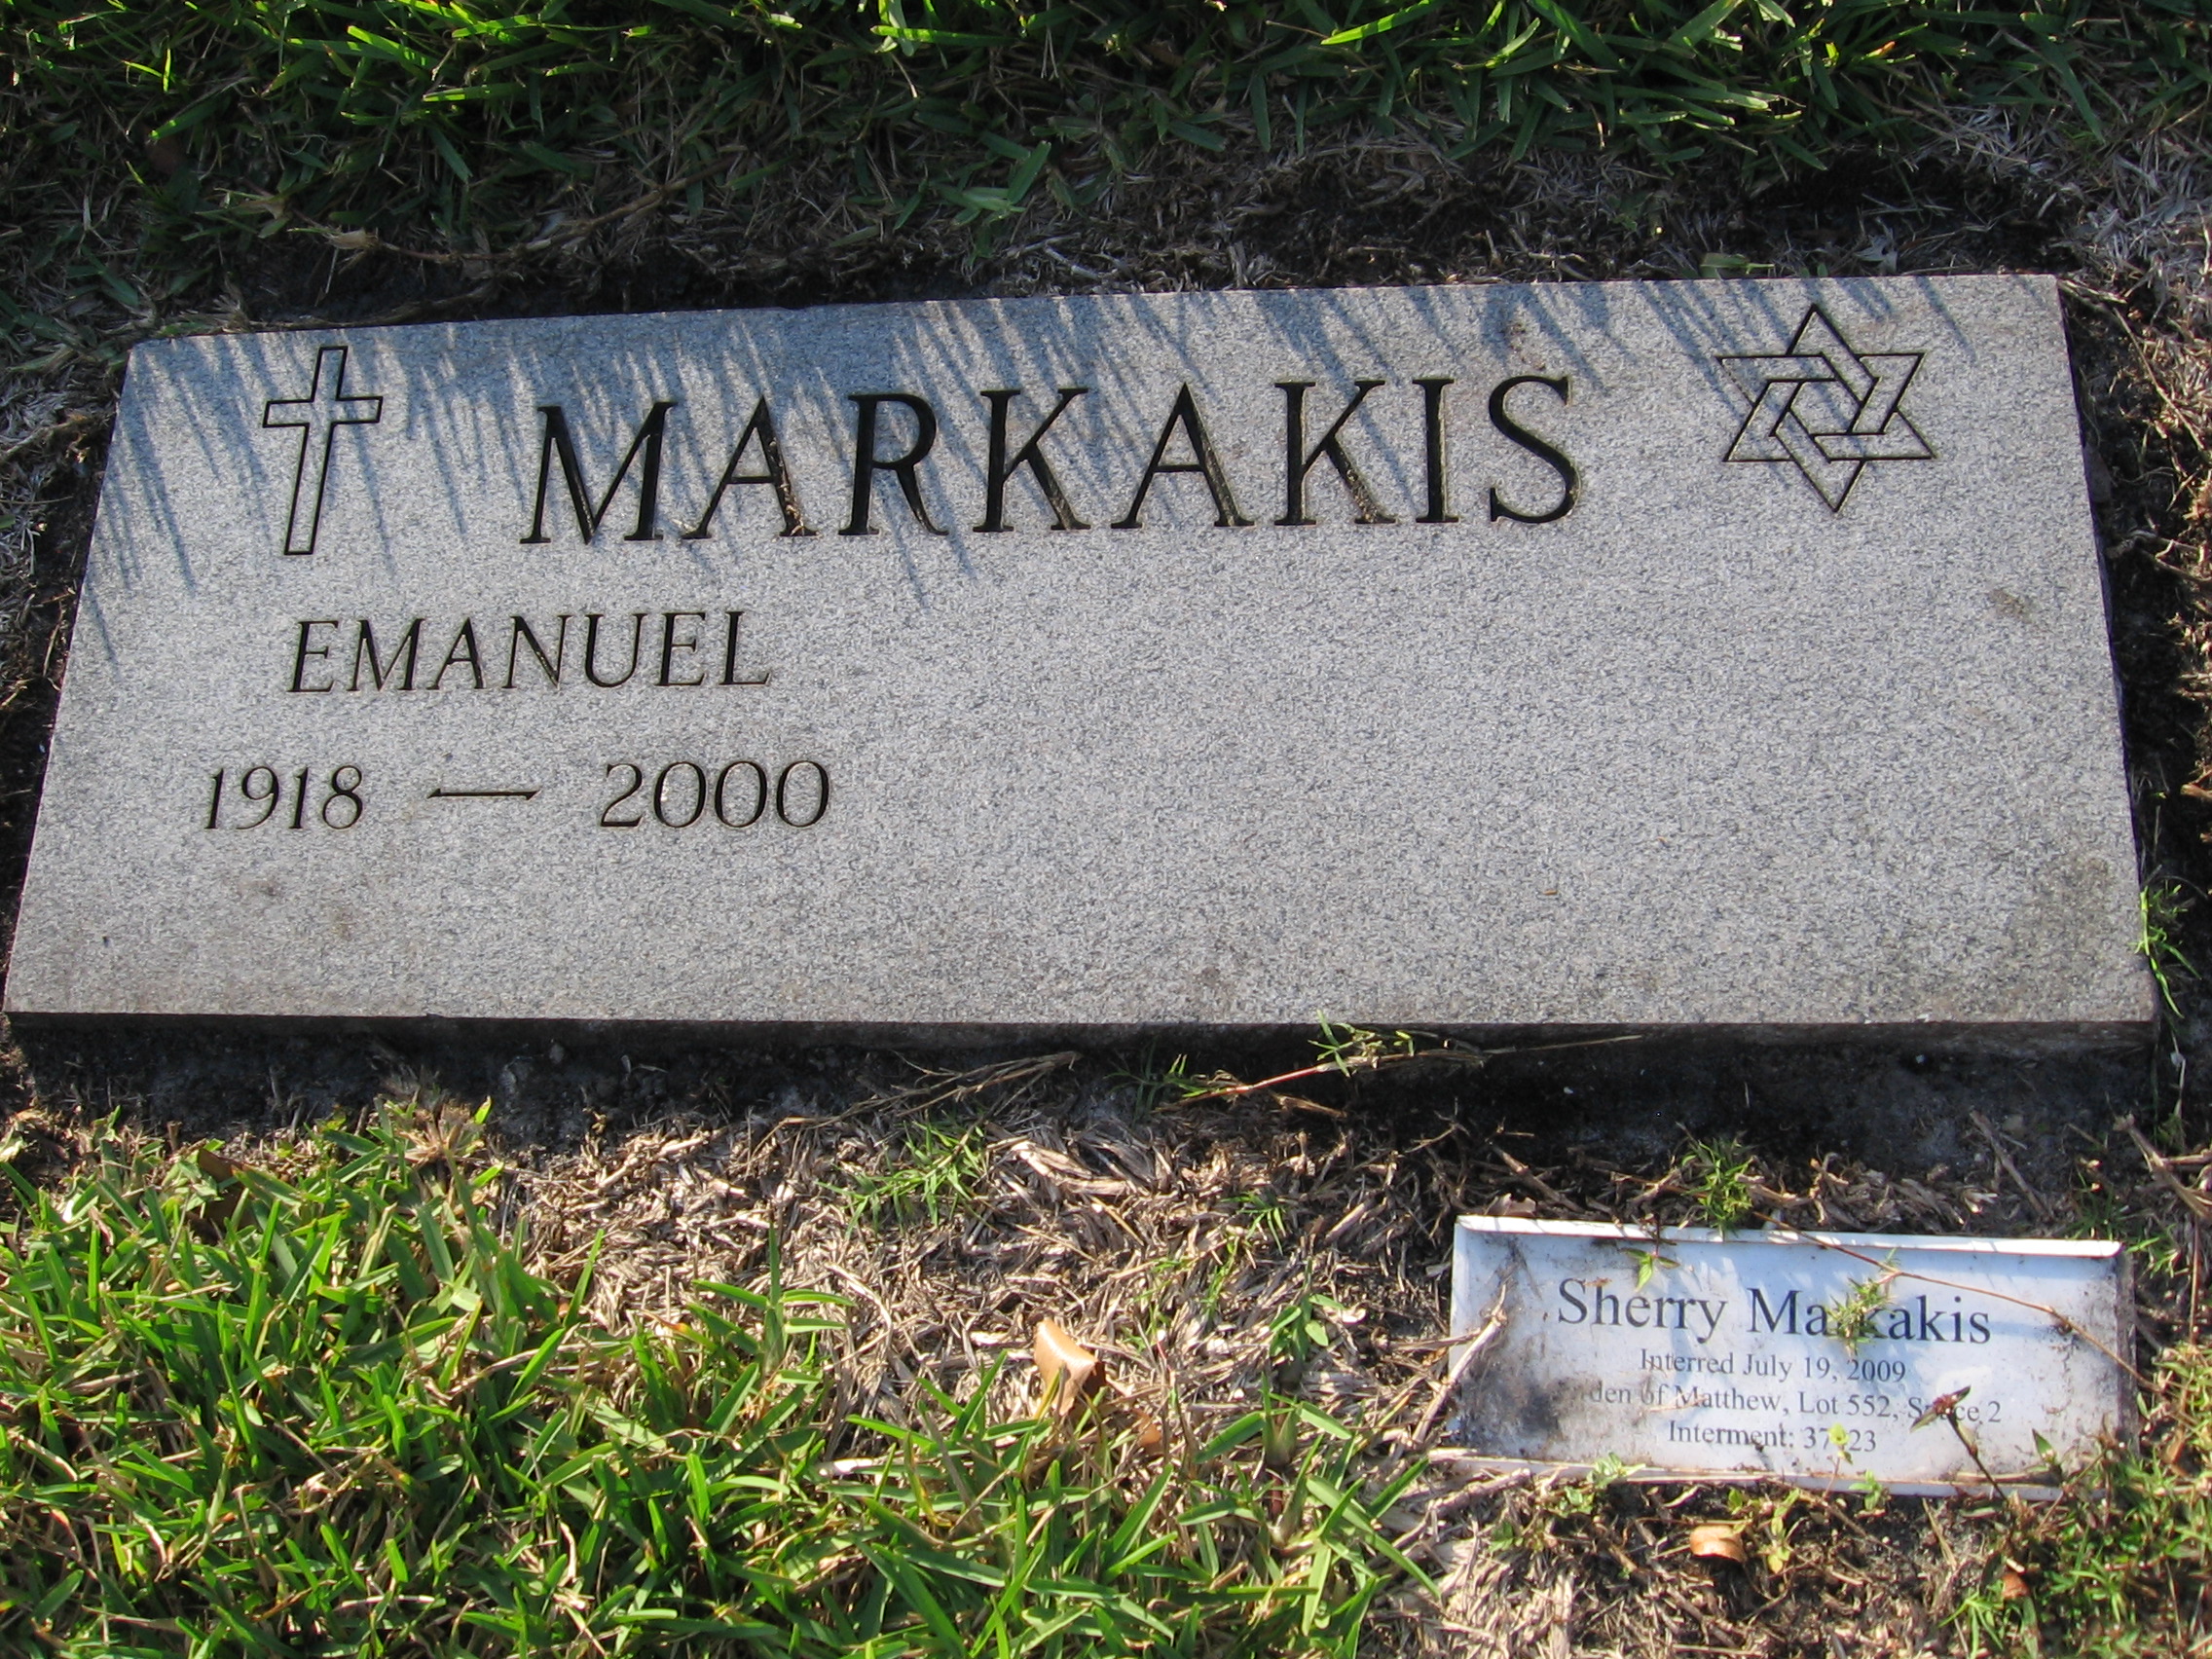 Emanuel Markakis